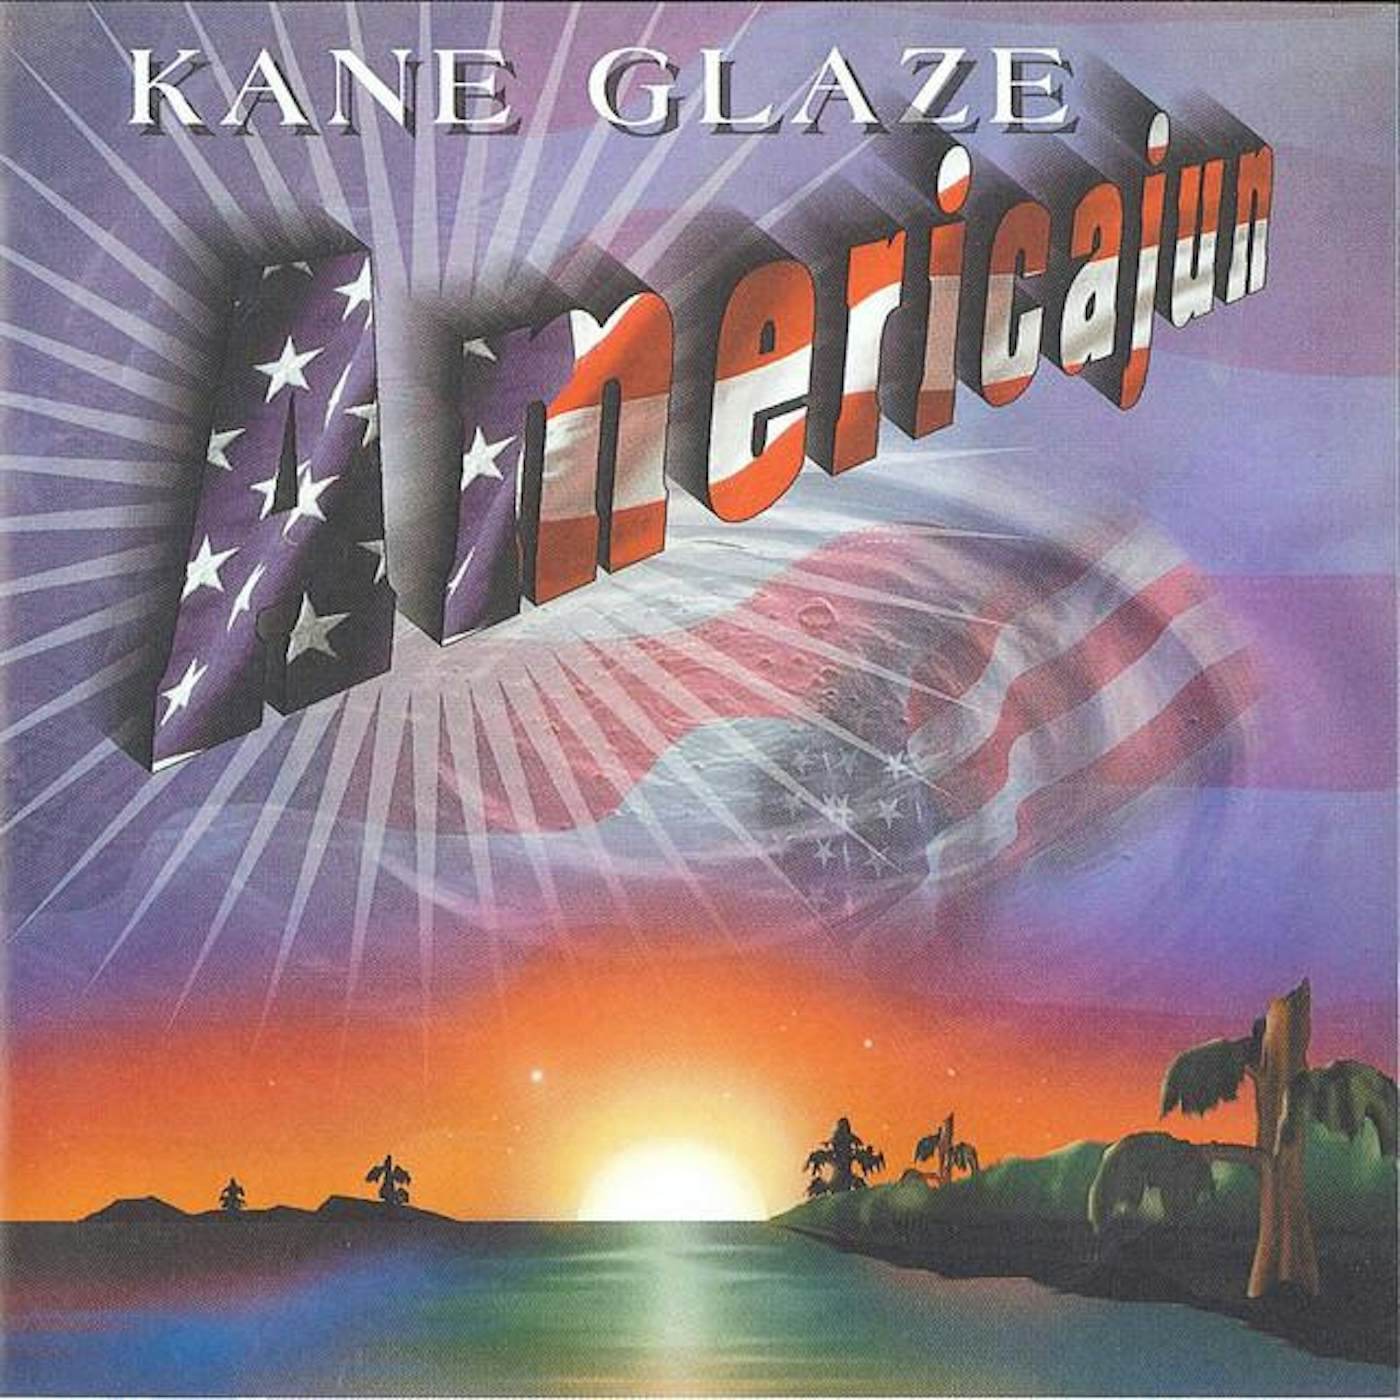 Kane Glaze